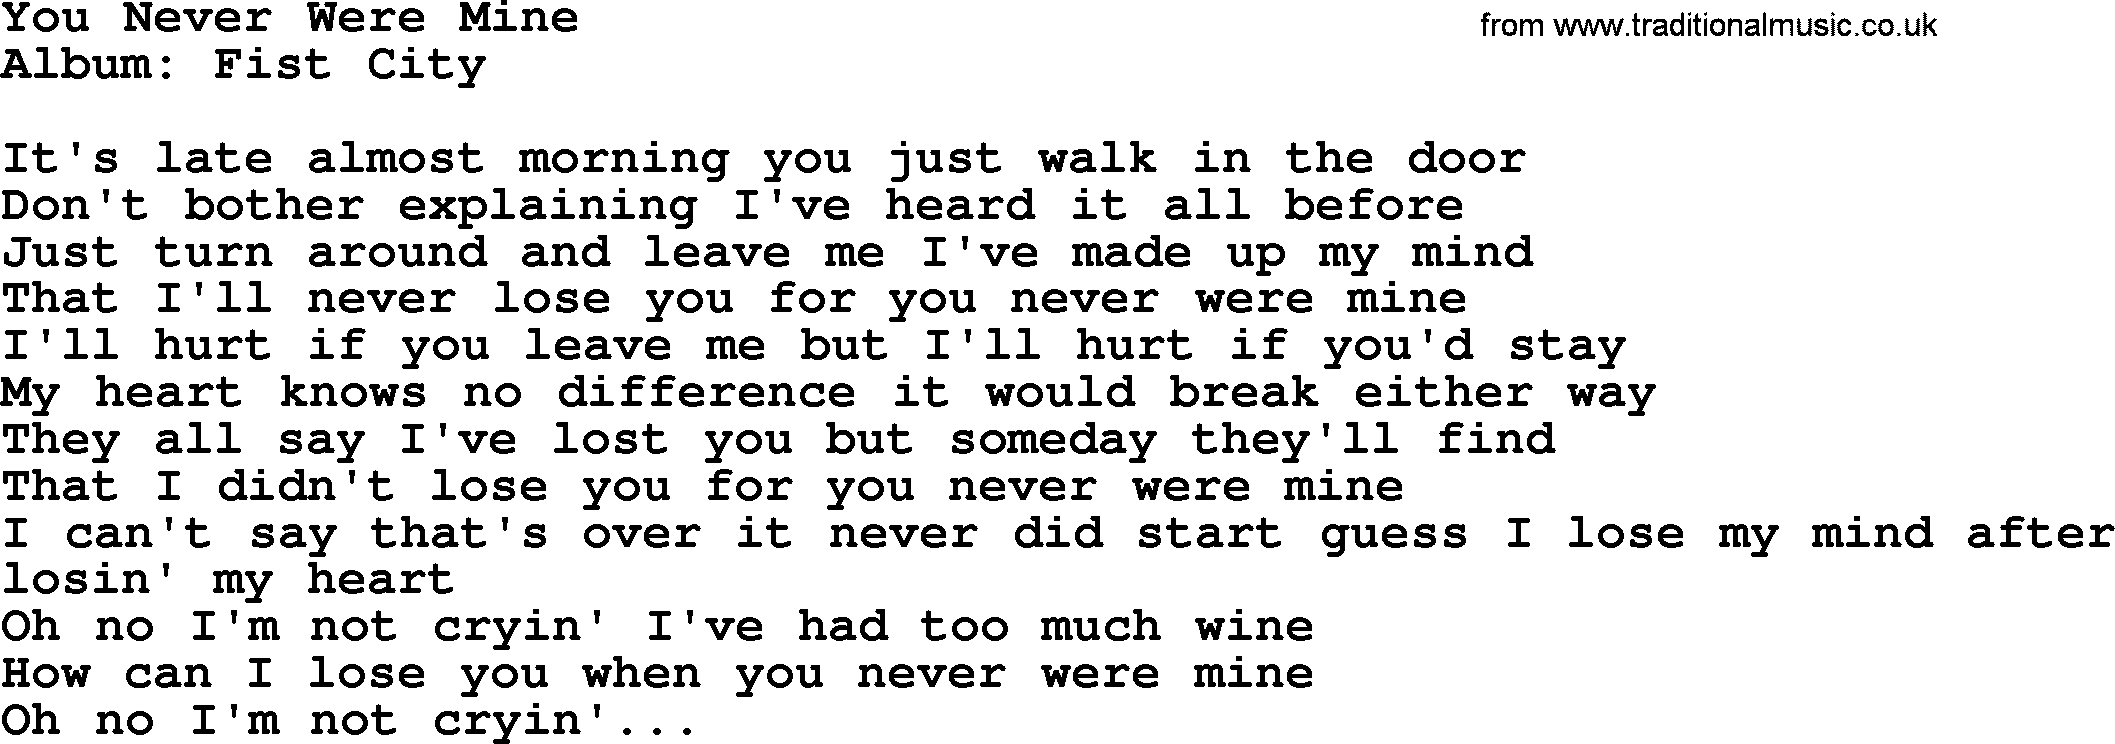 Loretta Lynn song: You Never Were Mine lyrics